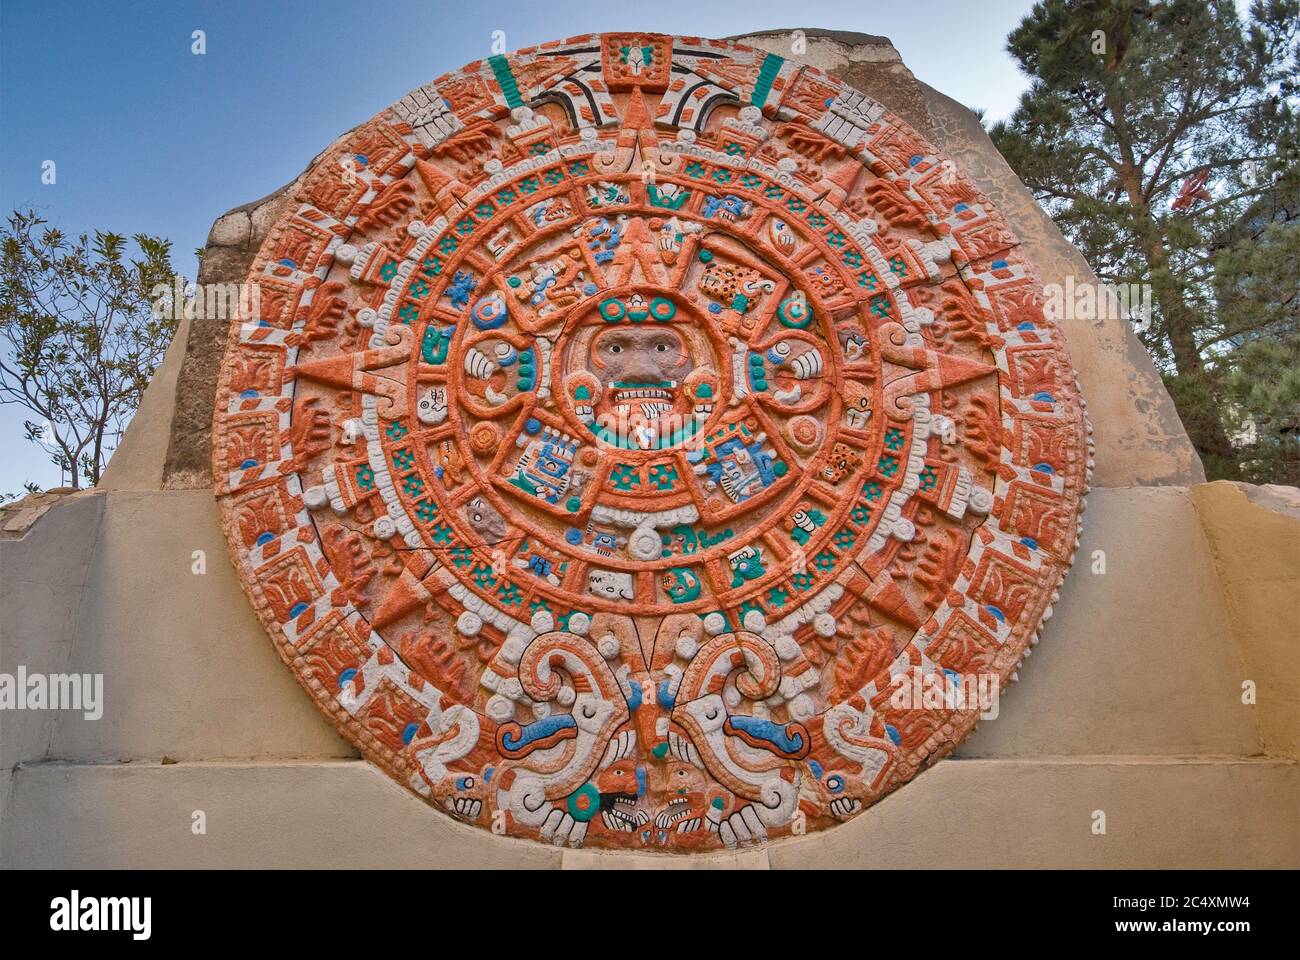 Aztec Calendar Replica In El Paso Texas Usa Stock Photo Alamy